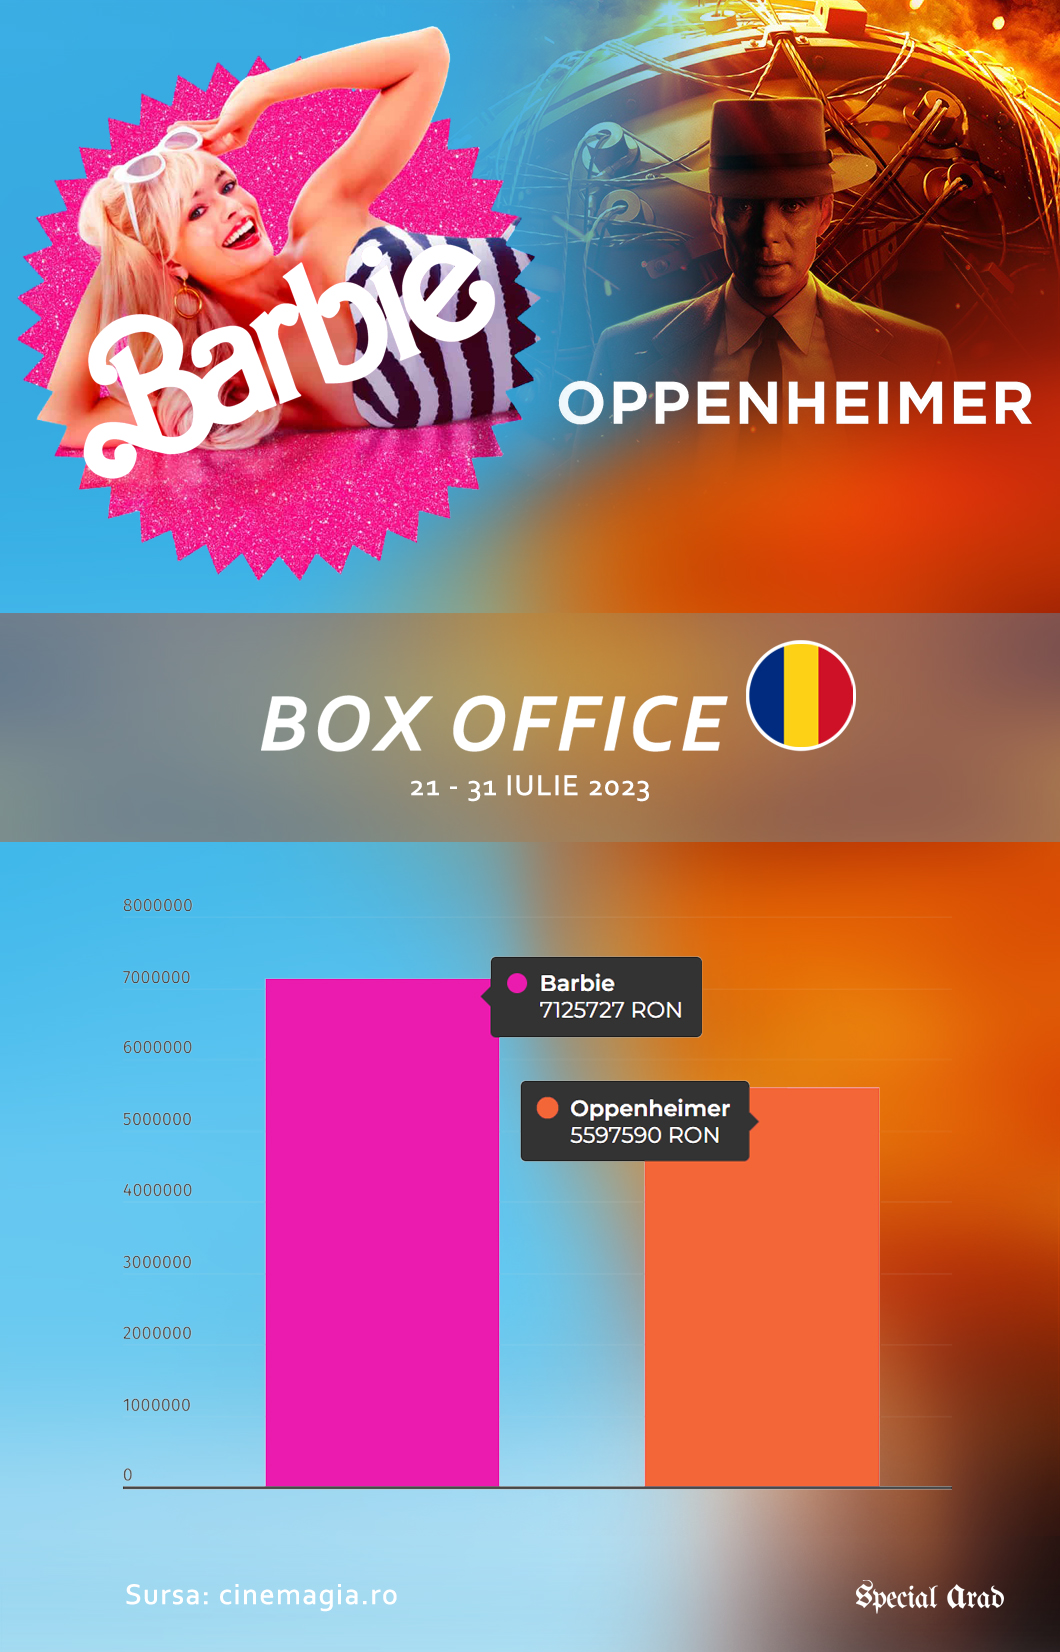 Barbie vs Oppenheimer box office Romania 21 - 31 iulie